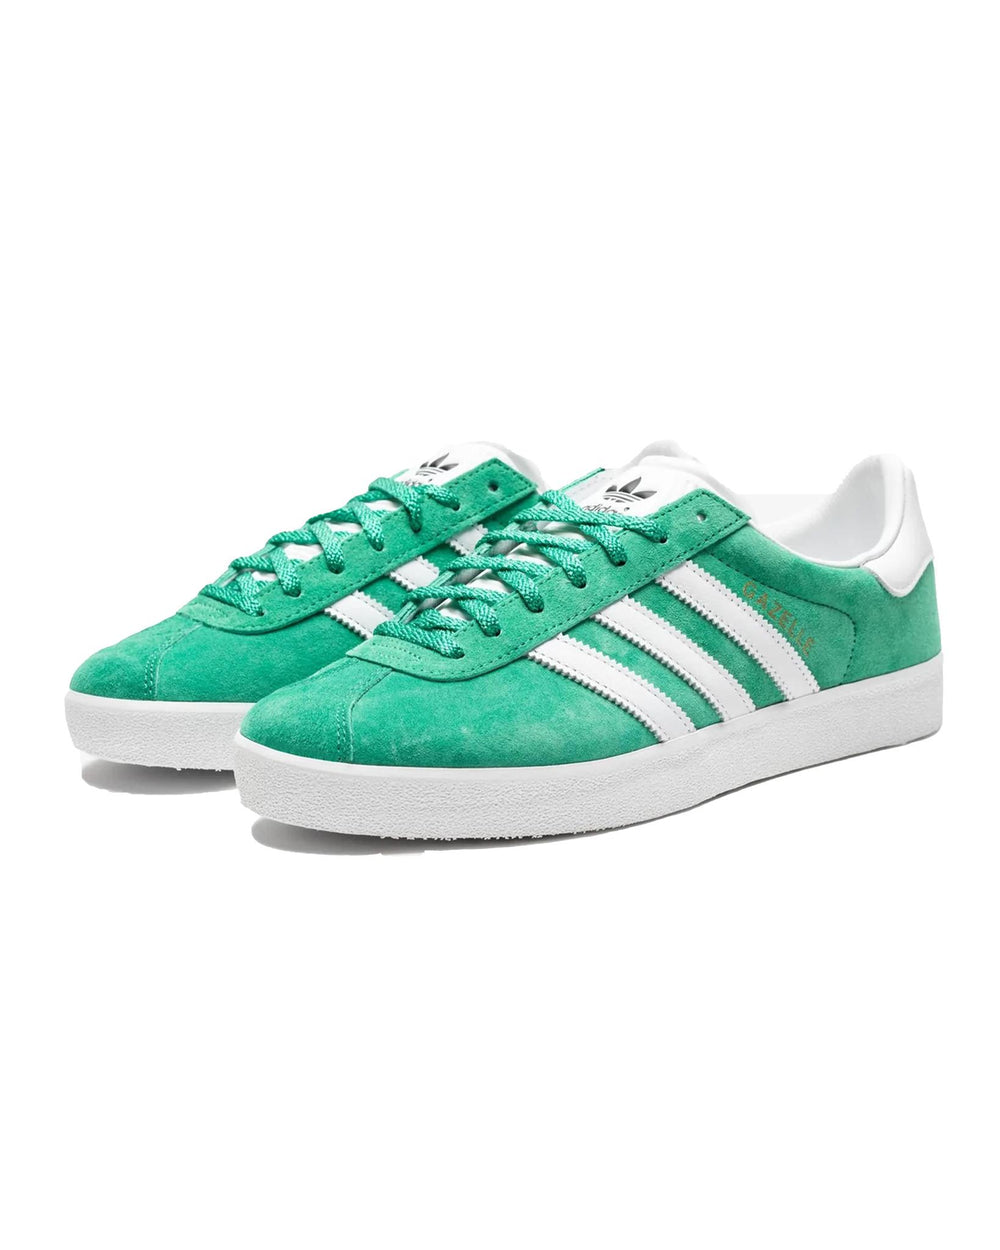 Adidas Gazelle 85 Shoes Green | STASHED